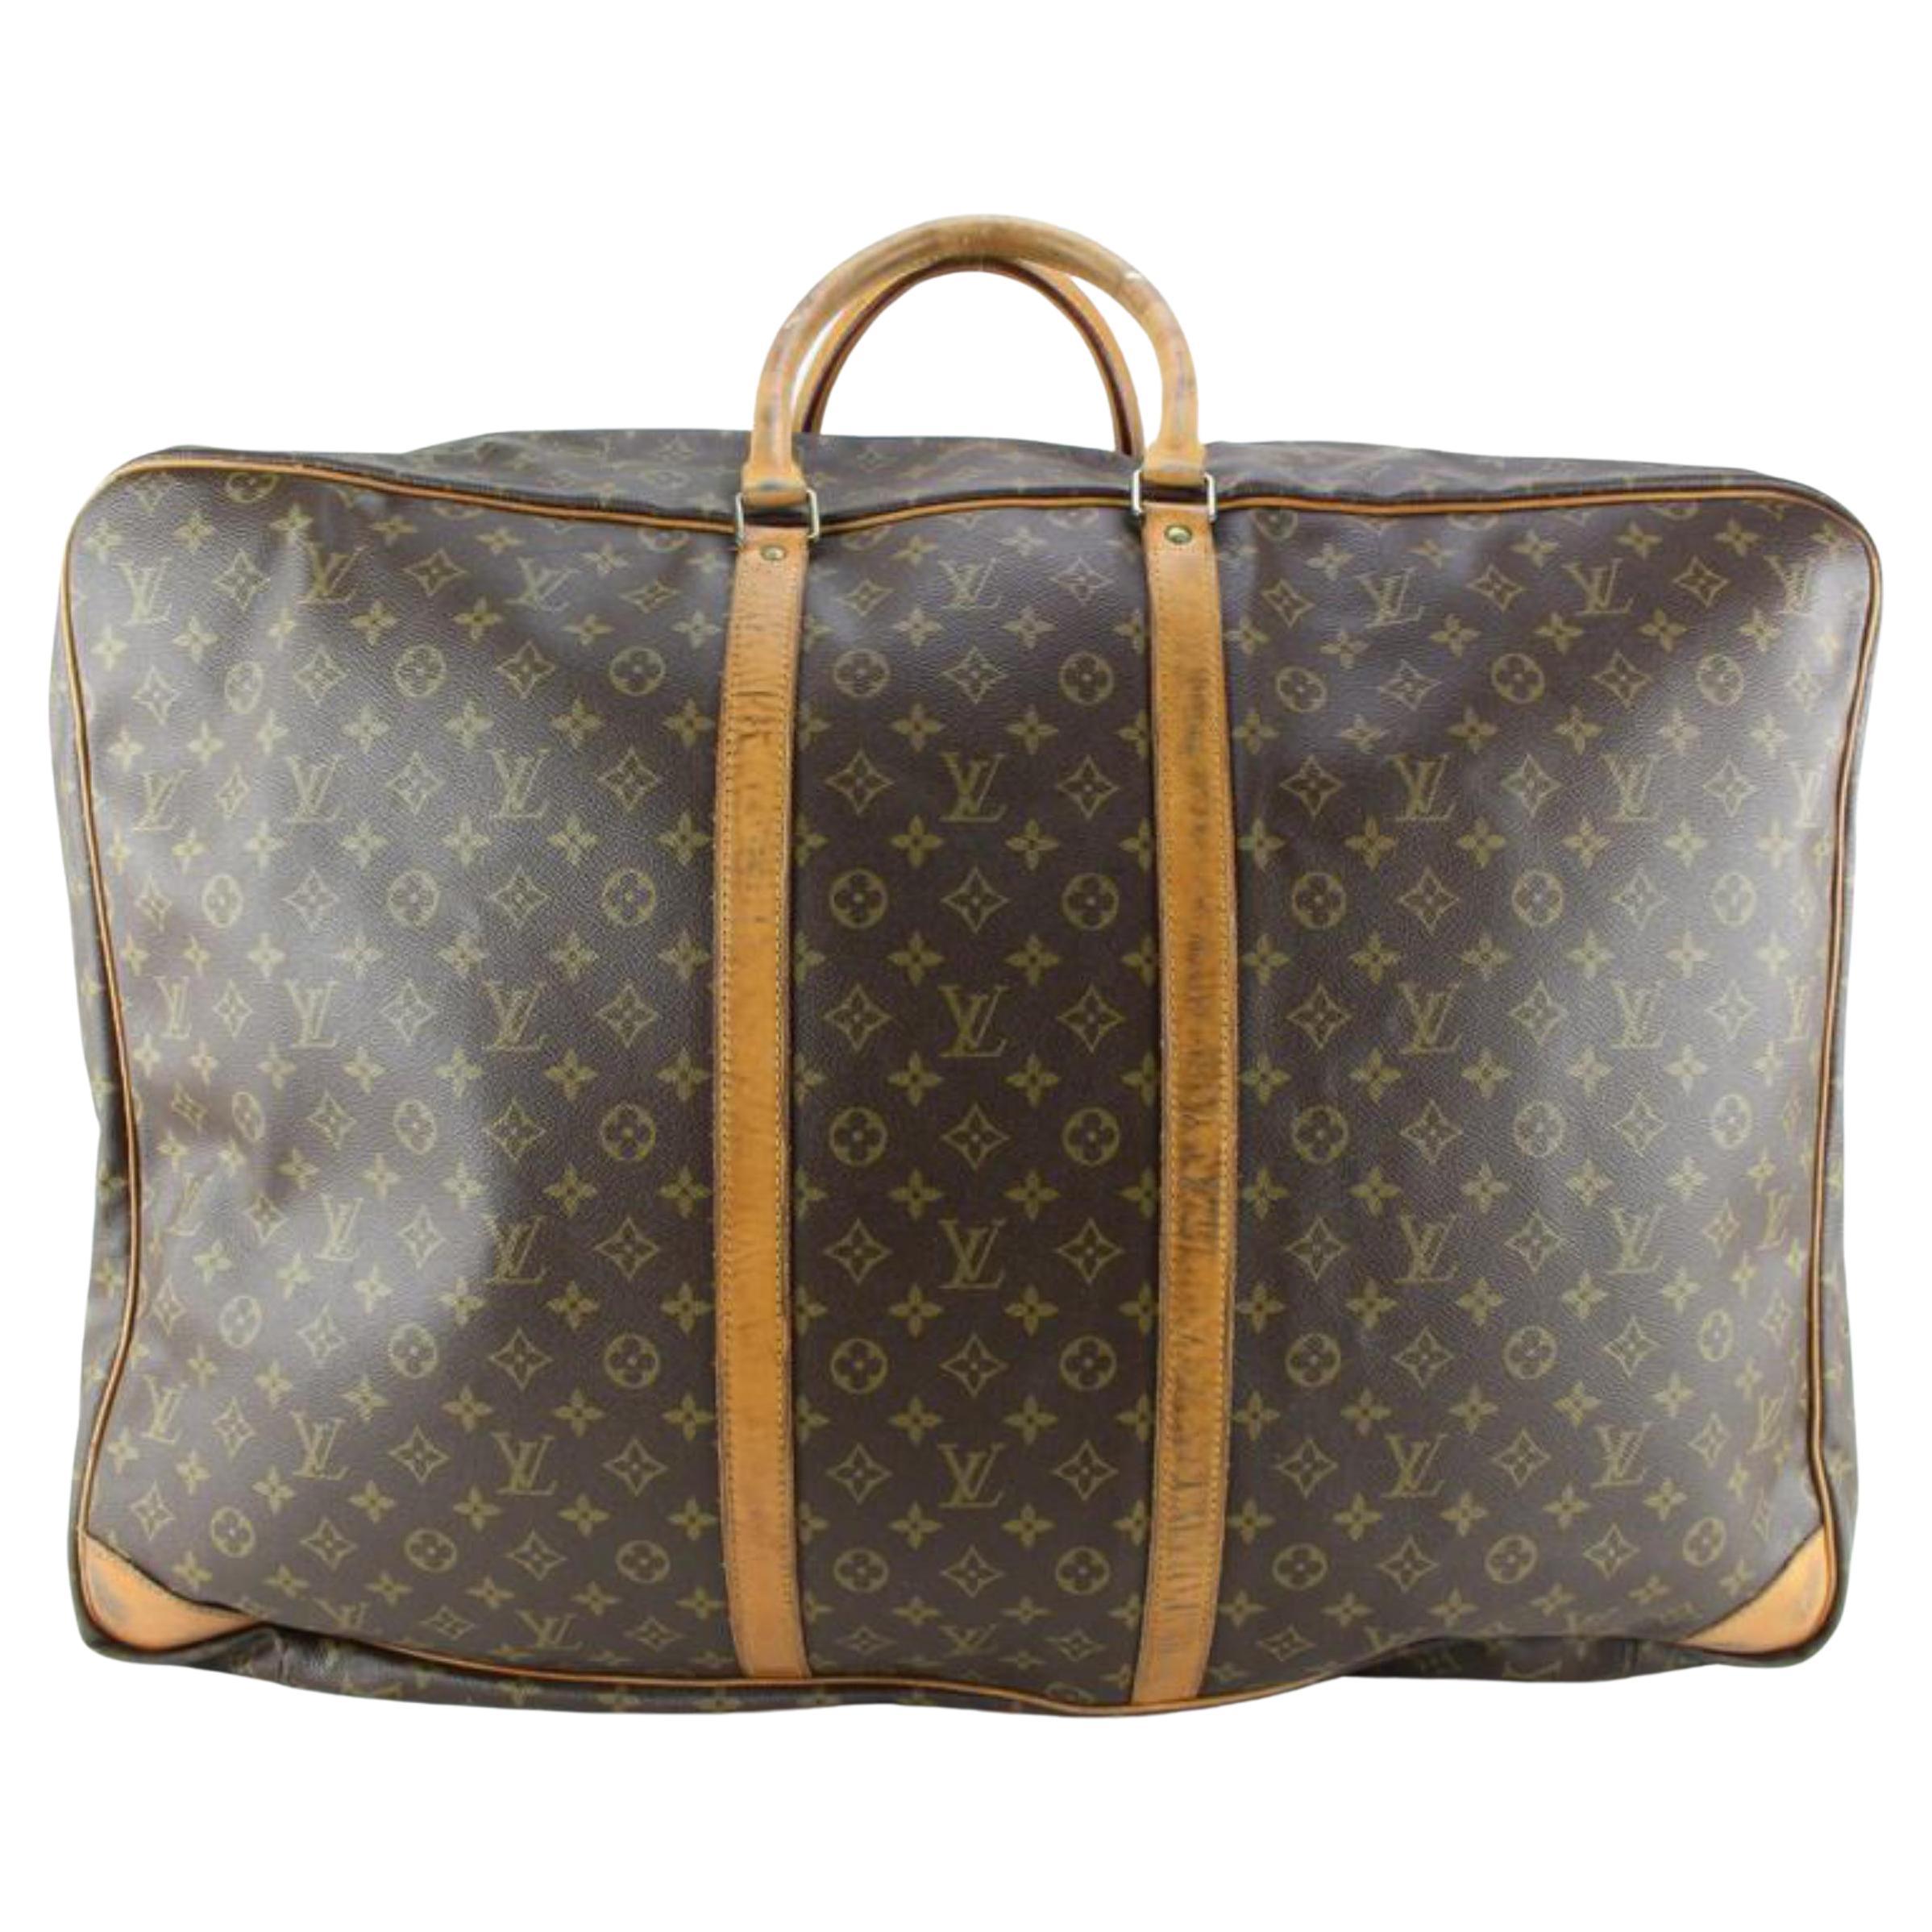 Louis Vuitton XL Monogram Sirius 70 Soft Trunk Luggage 77lk78s